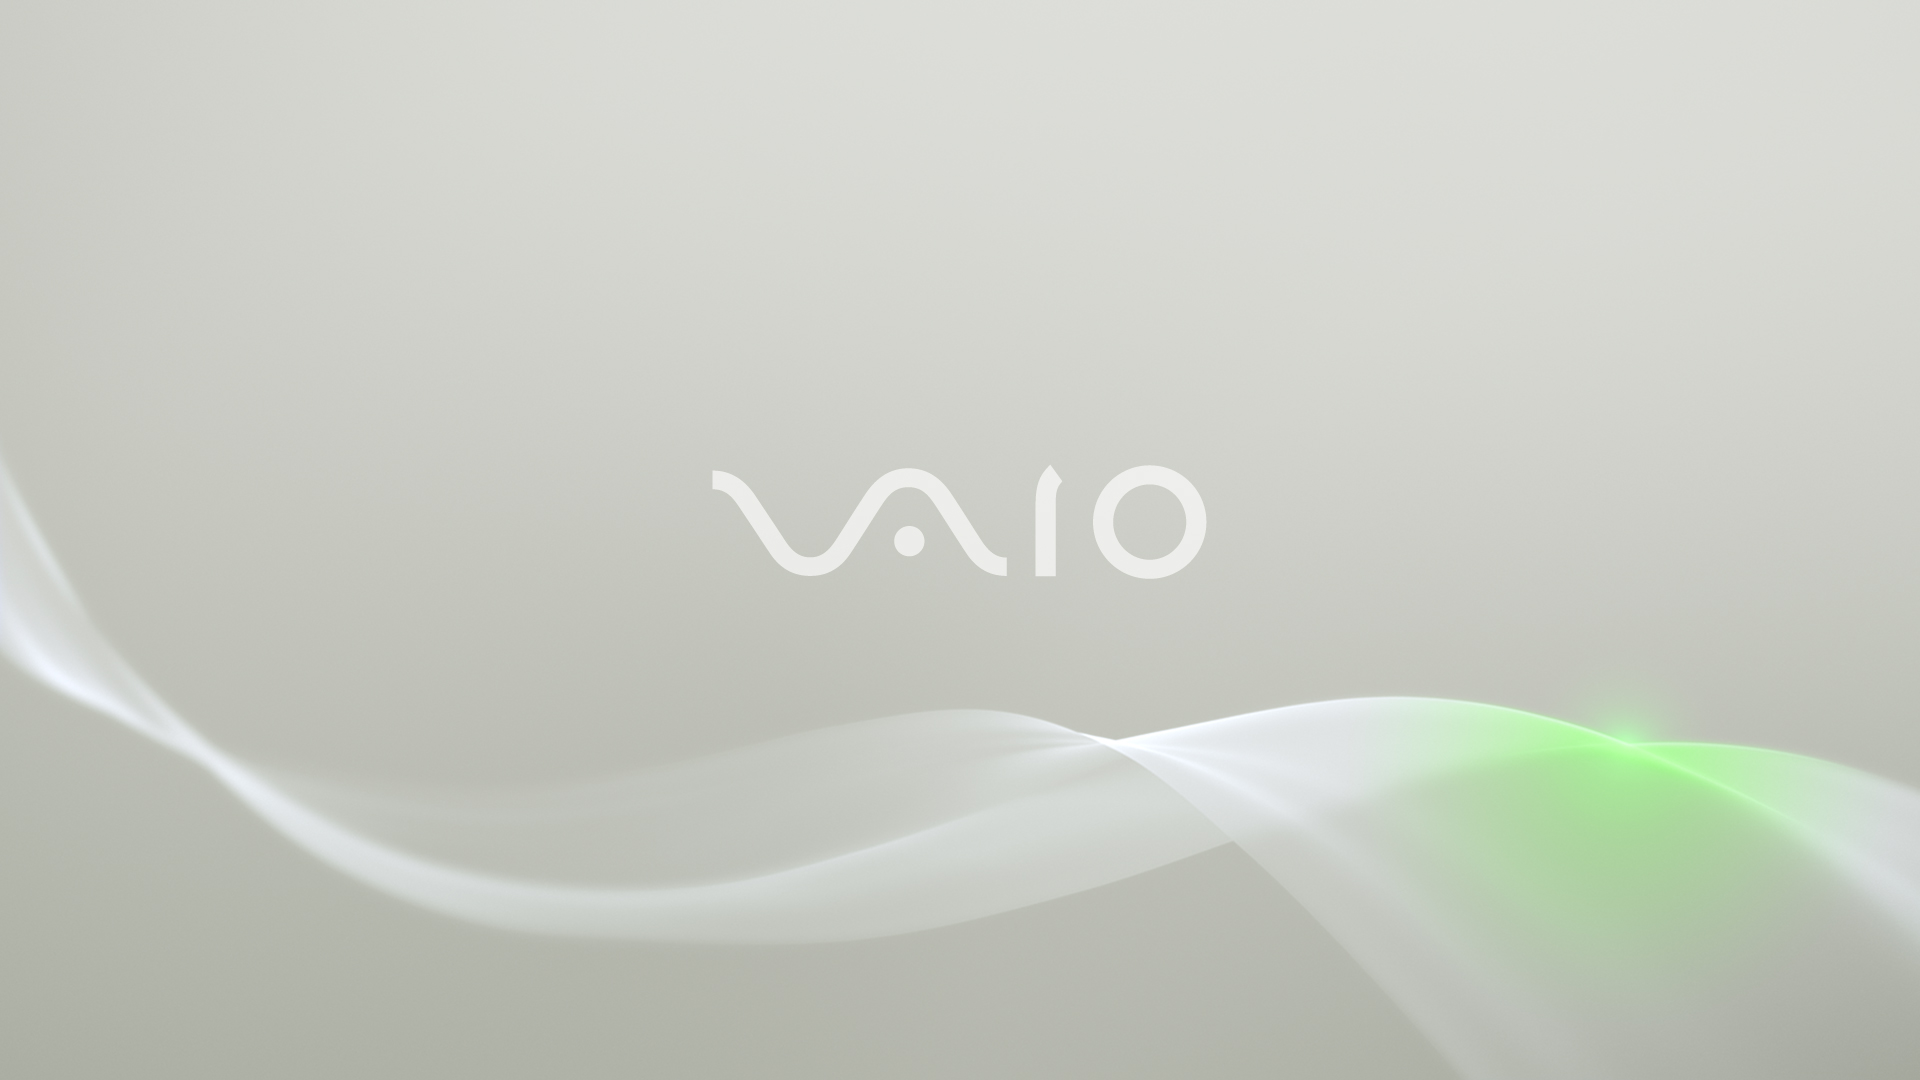 Vaio Wallpaper HD 1080p Sony